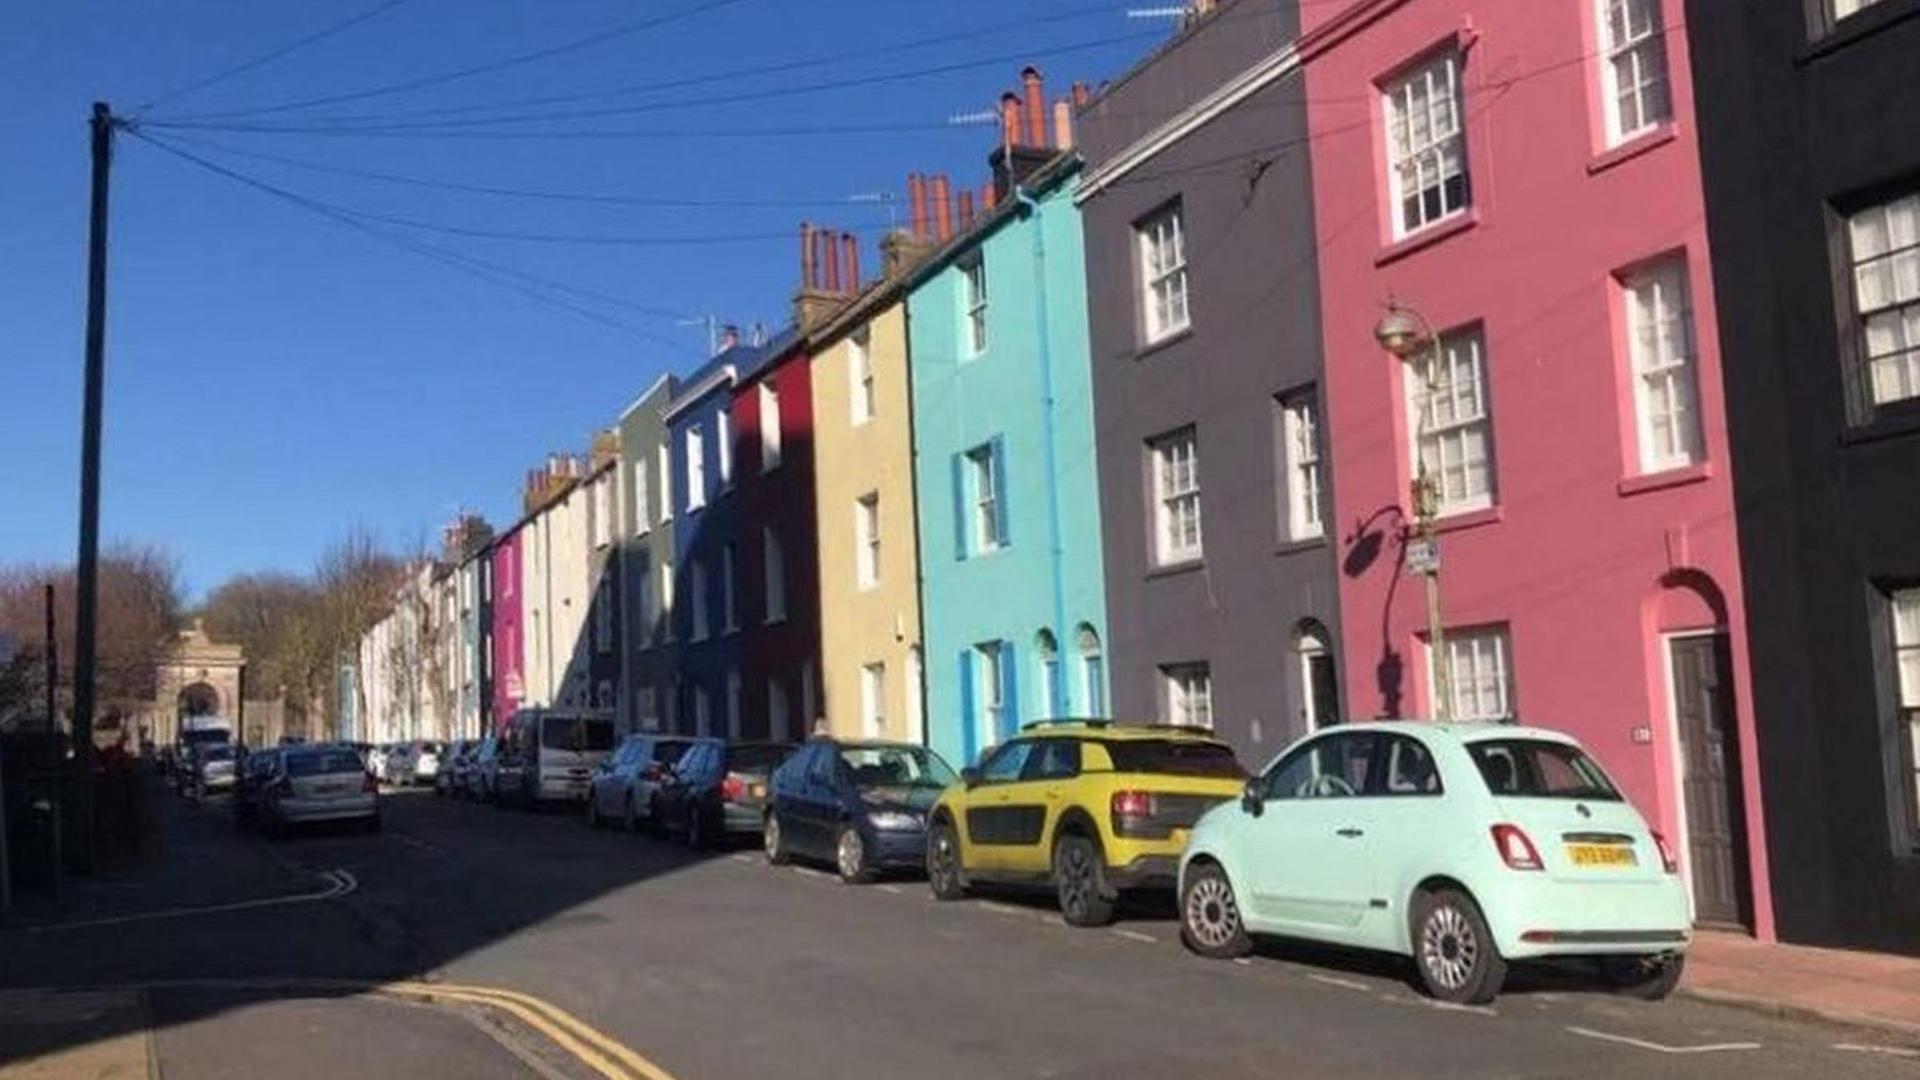 Best Neighbourhoods To Live In Brighton